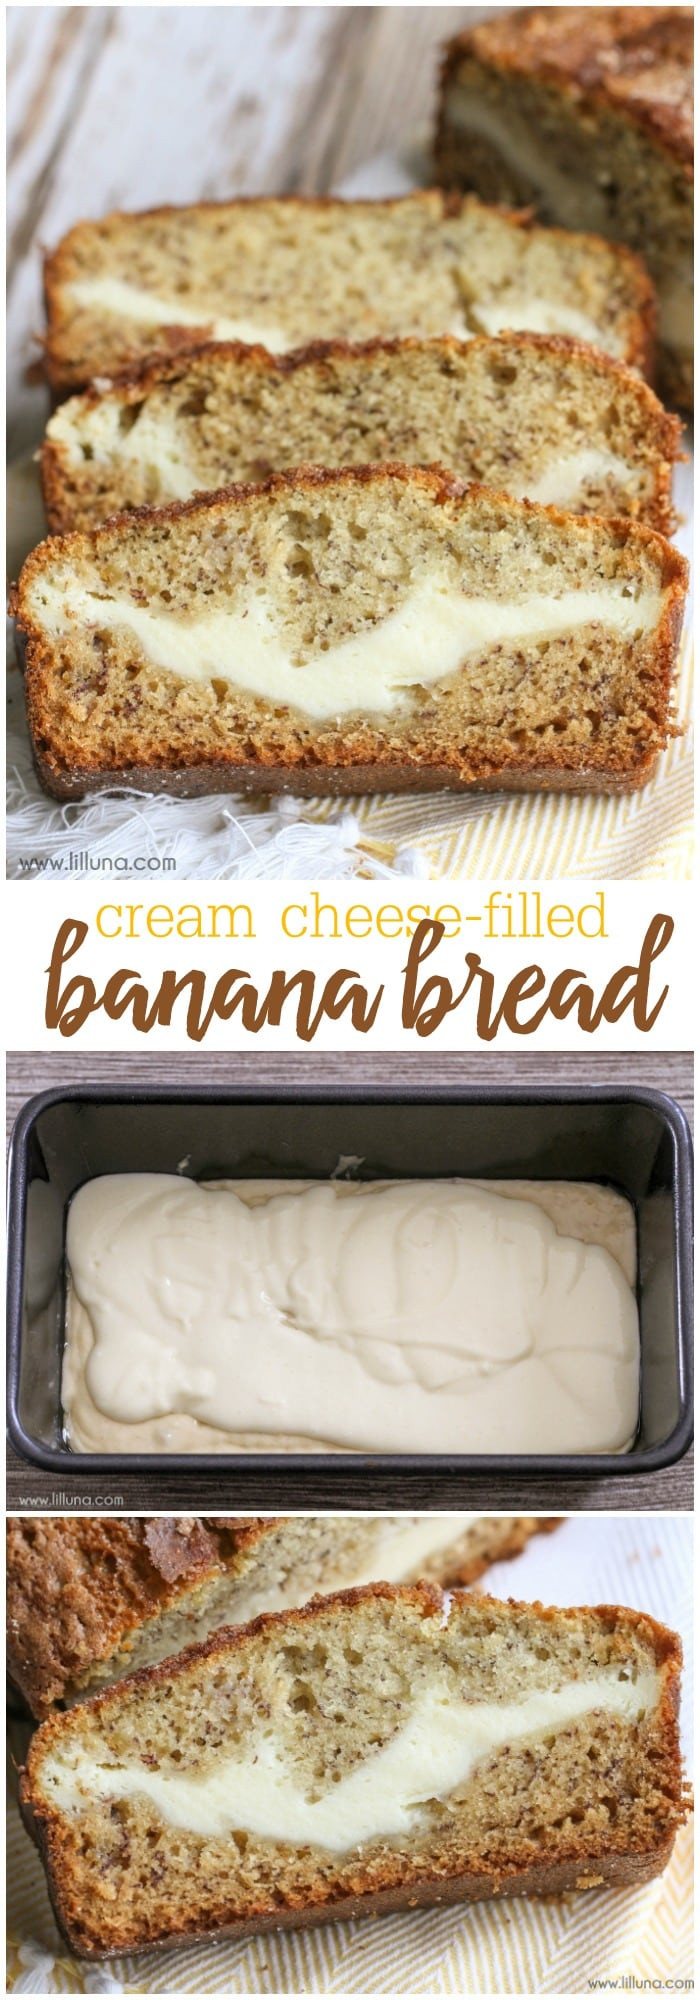 Banana Bread With Cream Cheese Filling
 Cream Cheese Filled Banana Bread